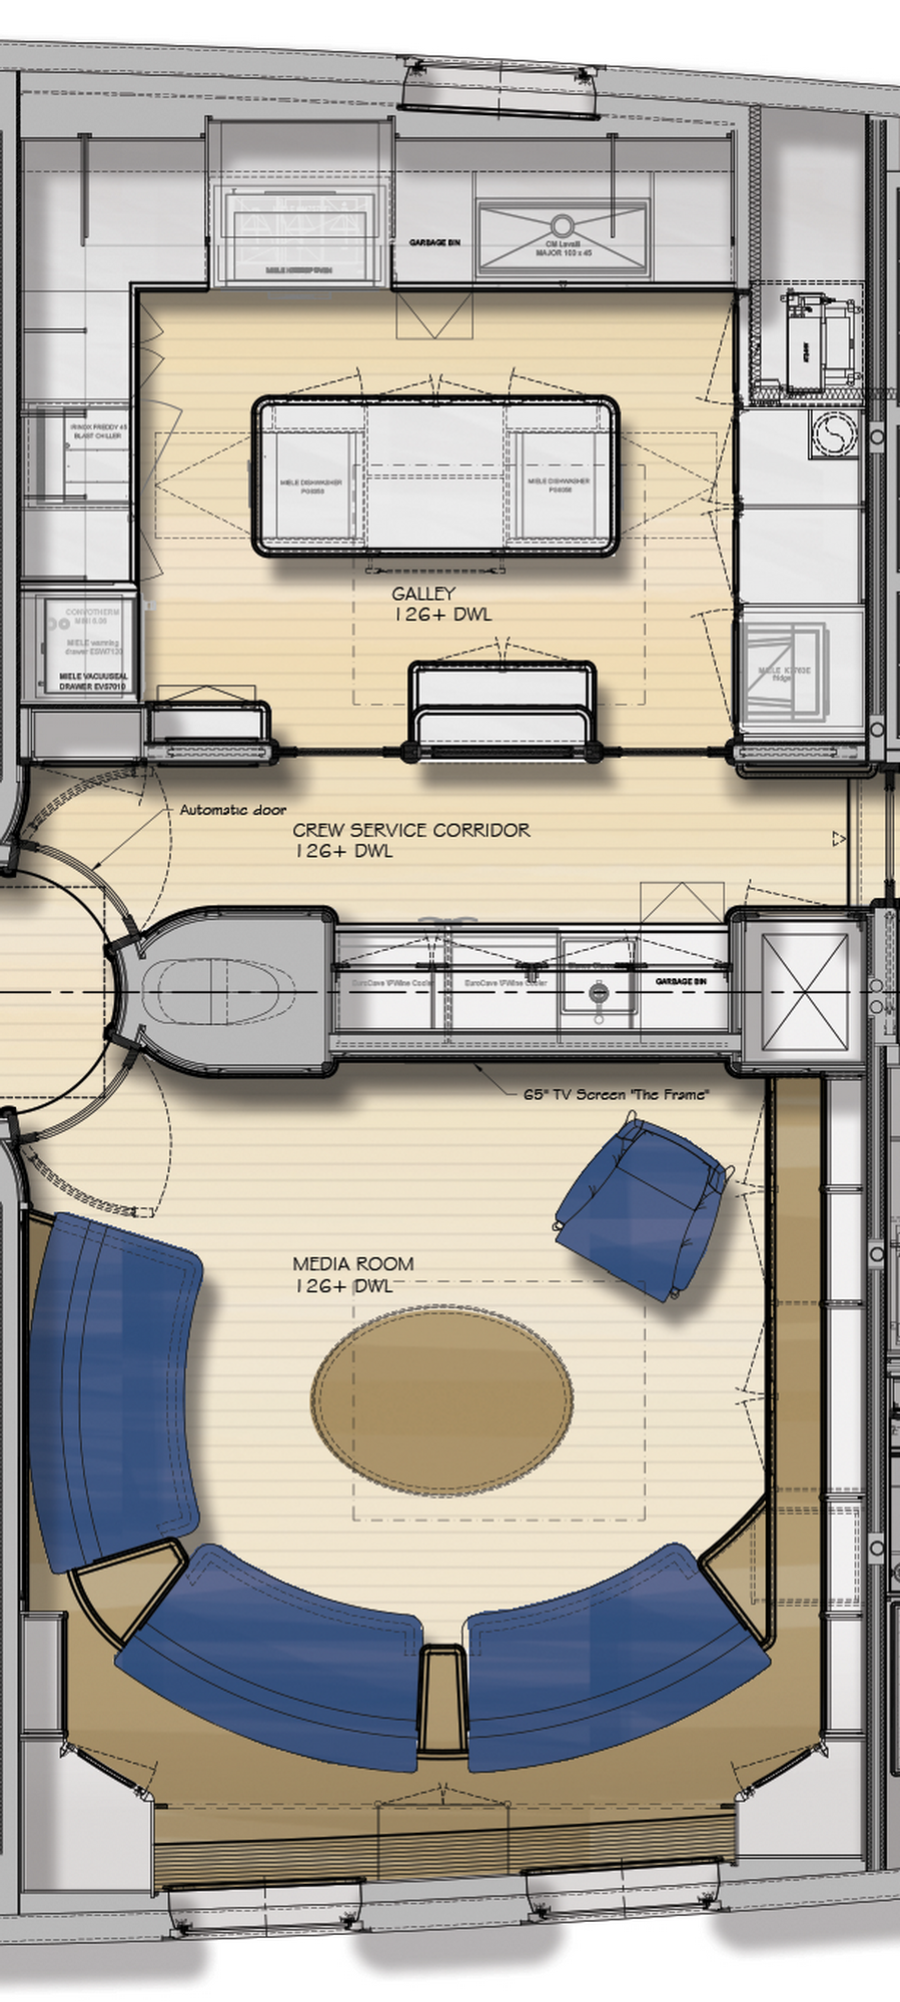 Athos layout galley salon after Huisfit resize v3